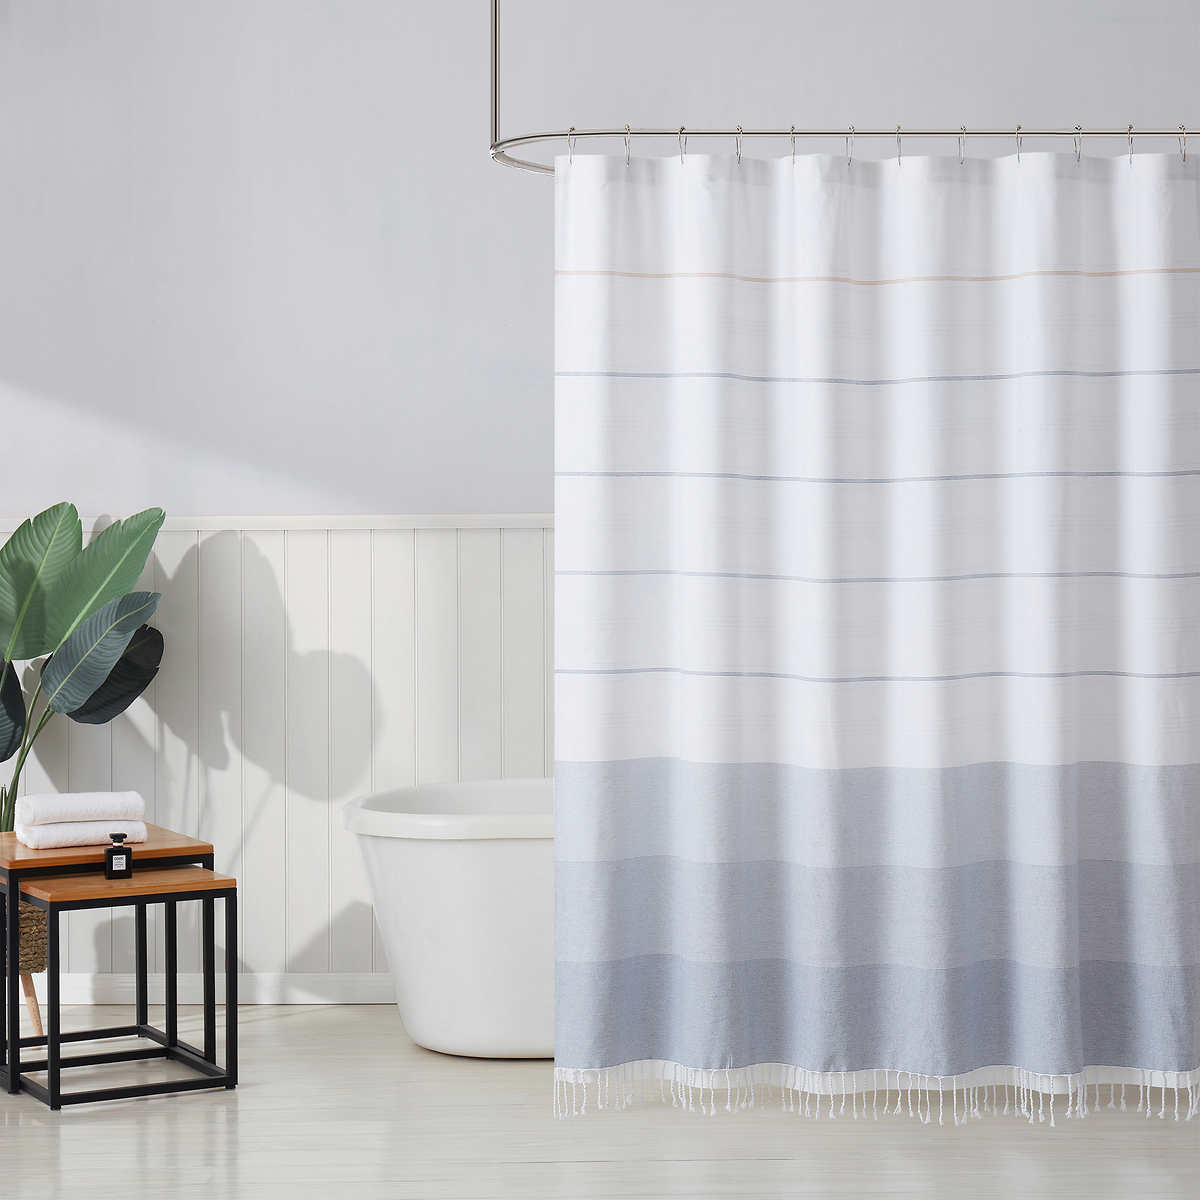 extra value shower curtain, Set of Hooks, Noodle bath mat Shower Set includes 1 